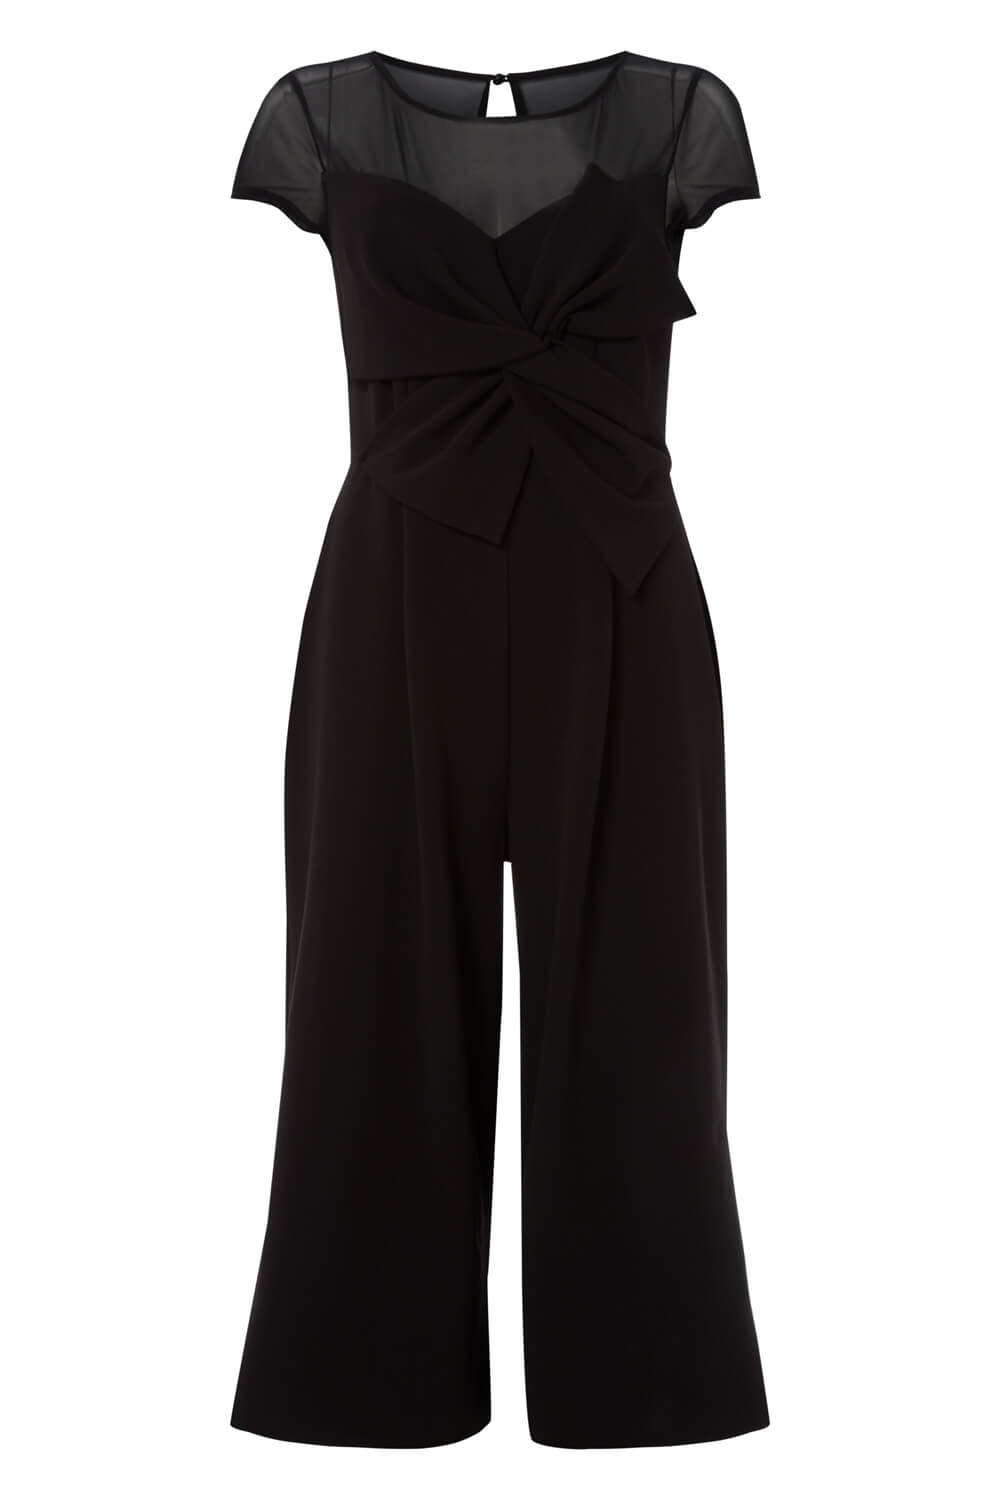 Black Bow Culotte Jumpsuit, Image 4 of 4